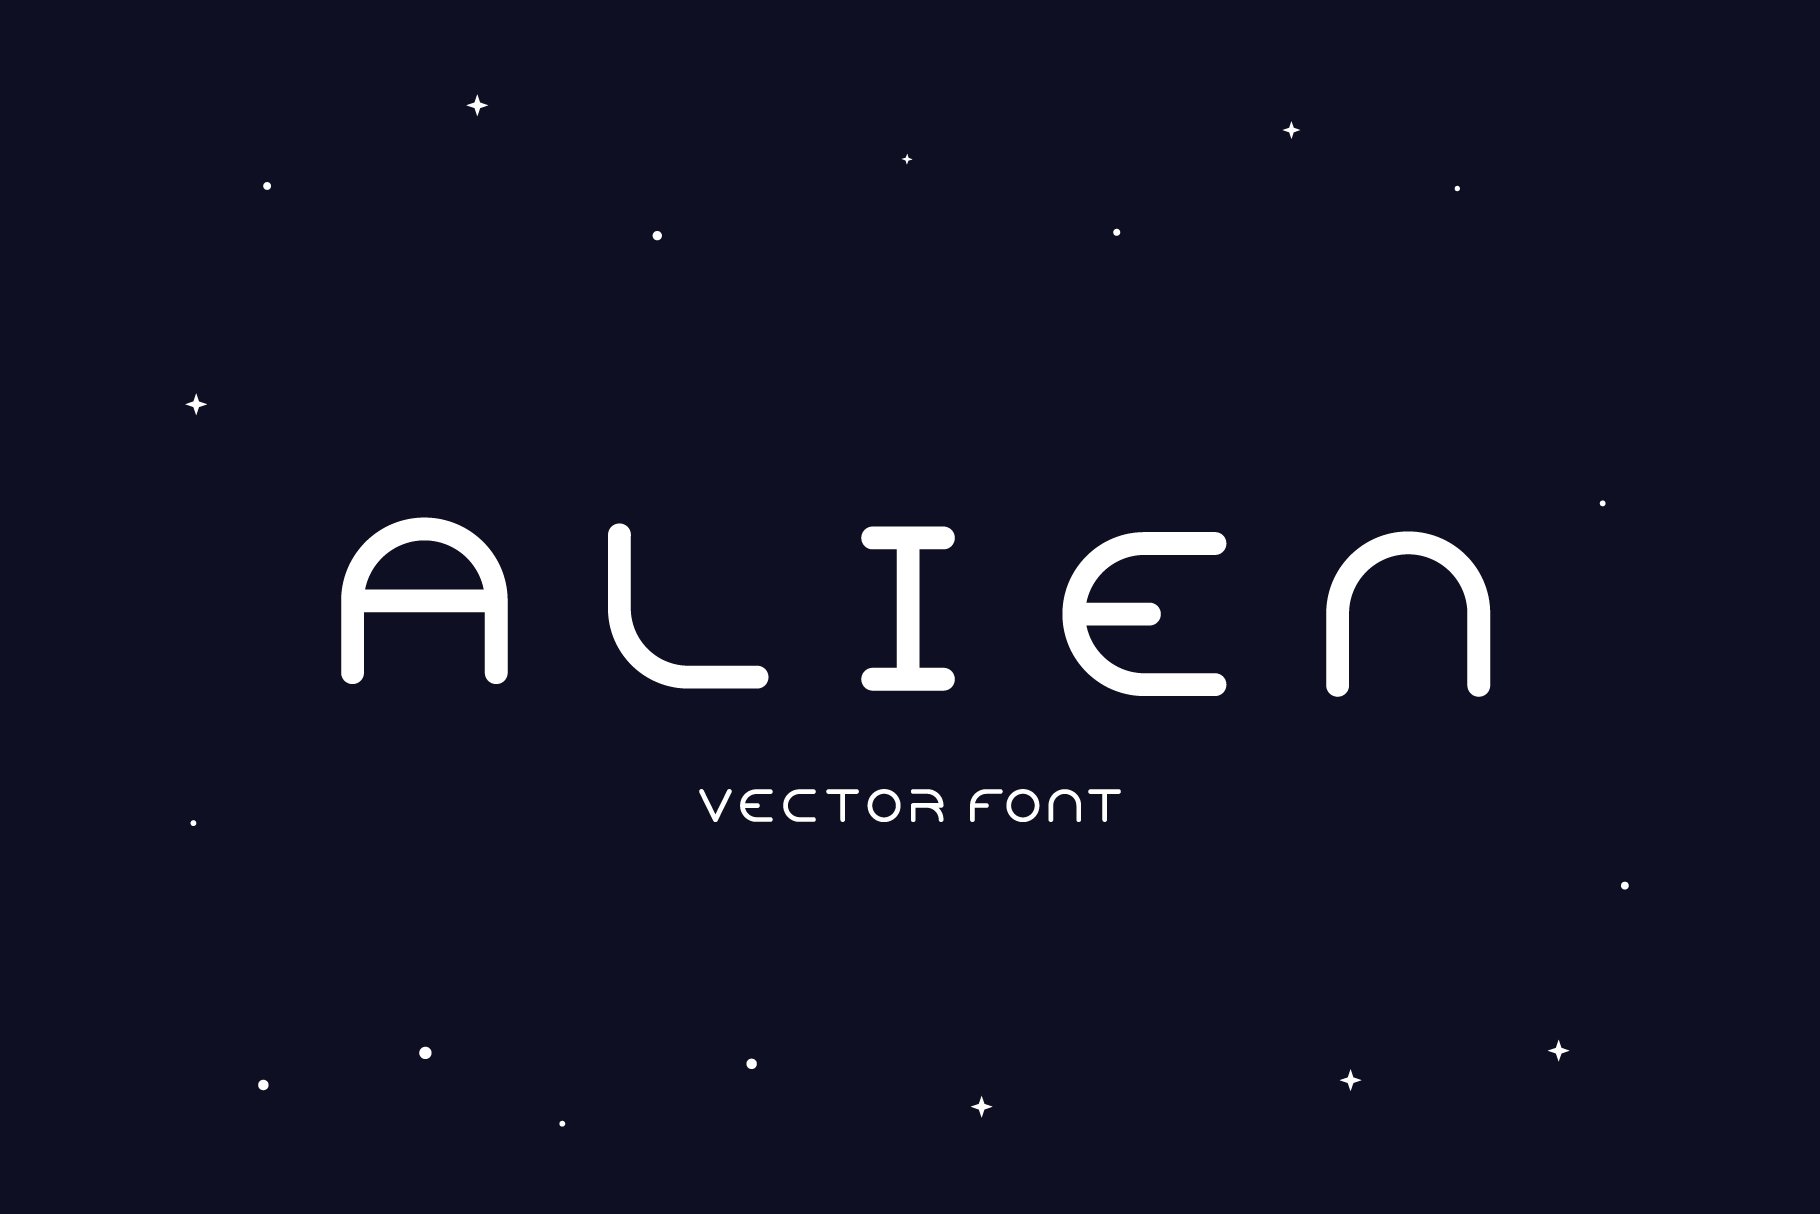 Vector Font. Alien cover image.